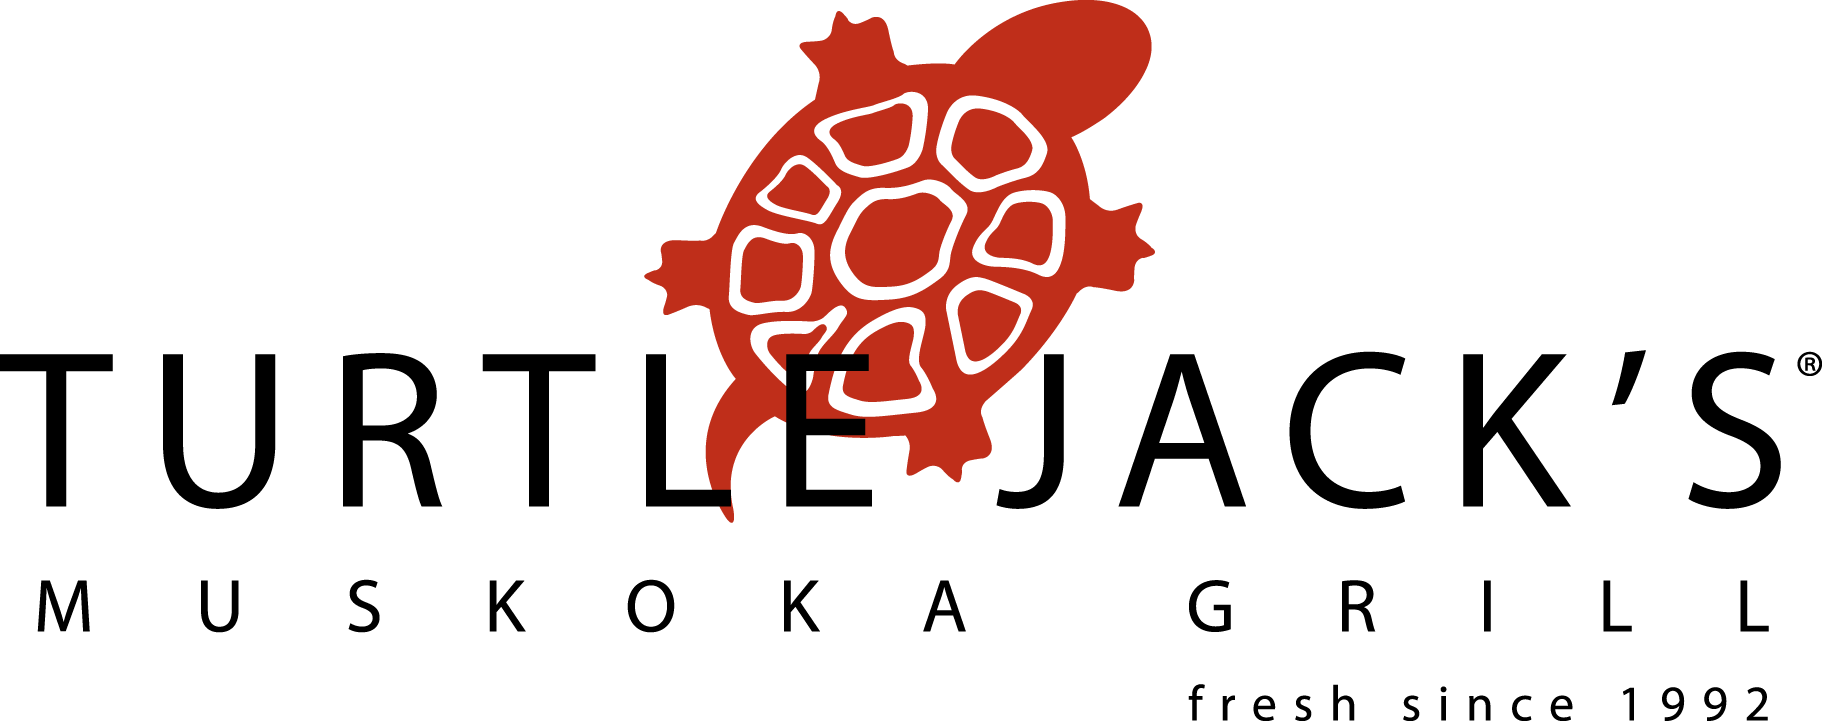 Turtle Jacks logo